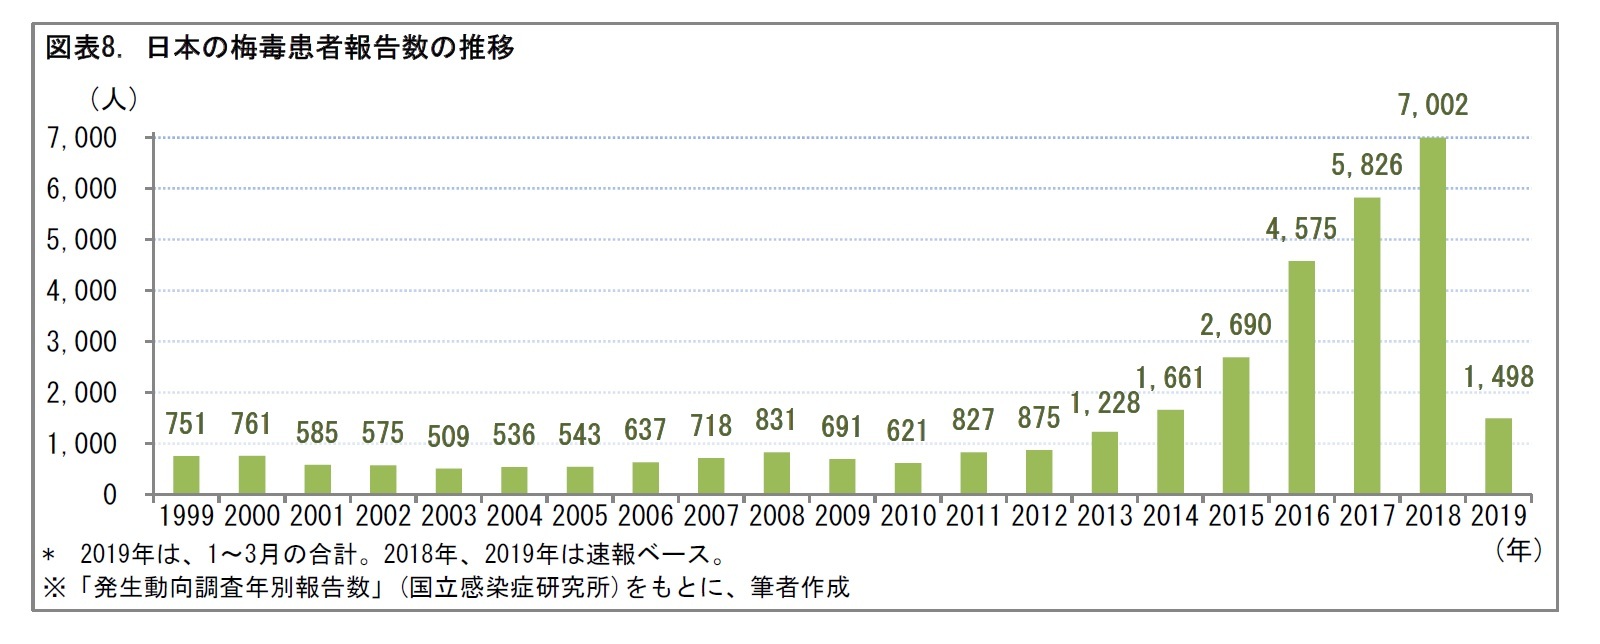 図表8. 日本の梅毒患者報告数の推移